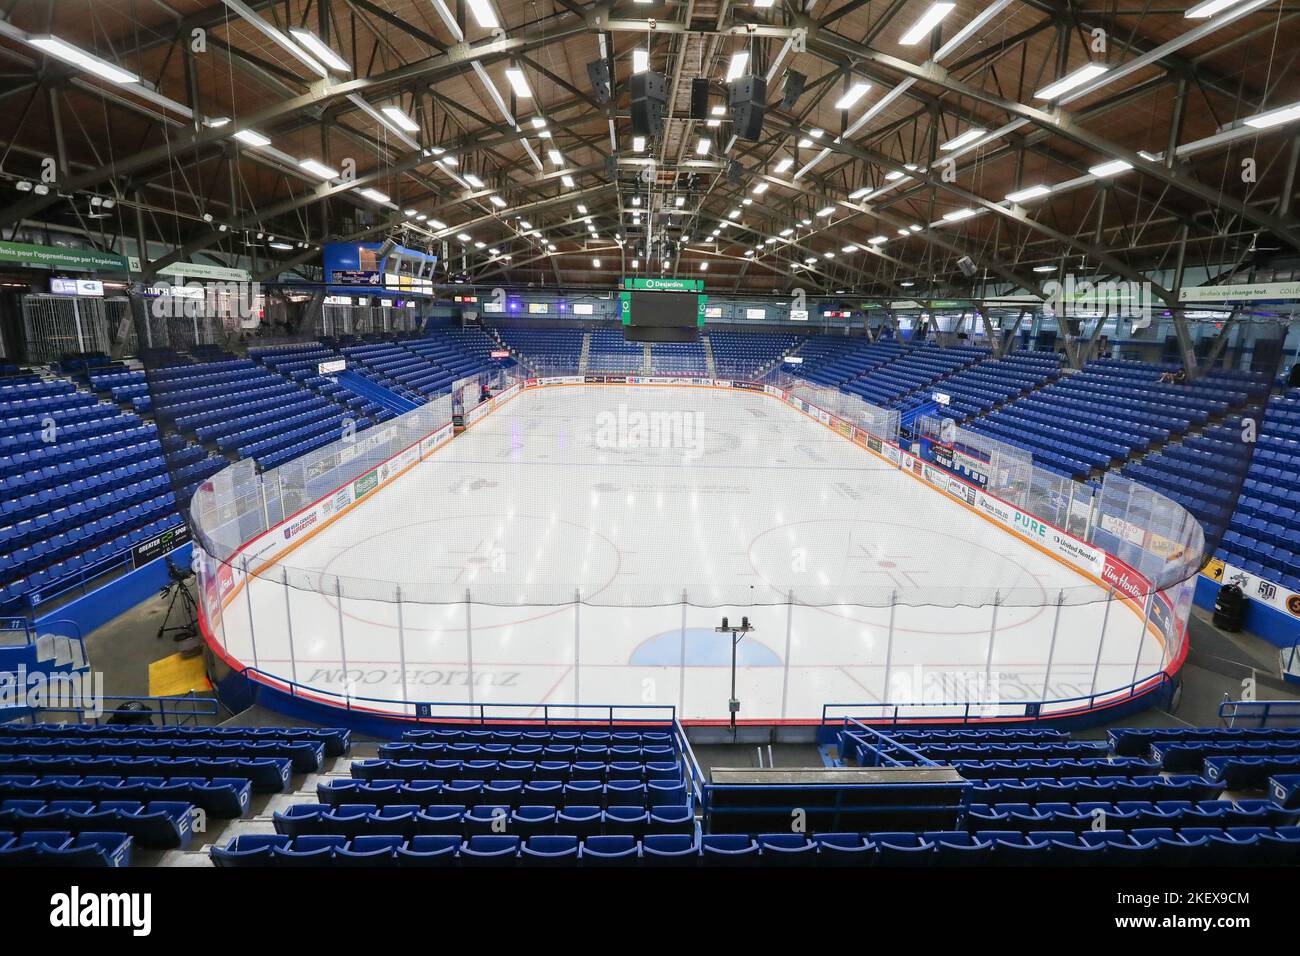 Nov 12 2022, Sudbury Ontario Canada, Sudbury Community Arena. Luke Durda/Alamy Stock Photo